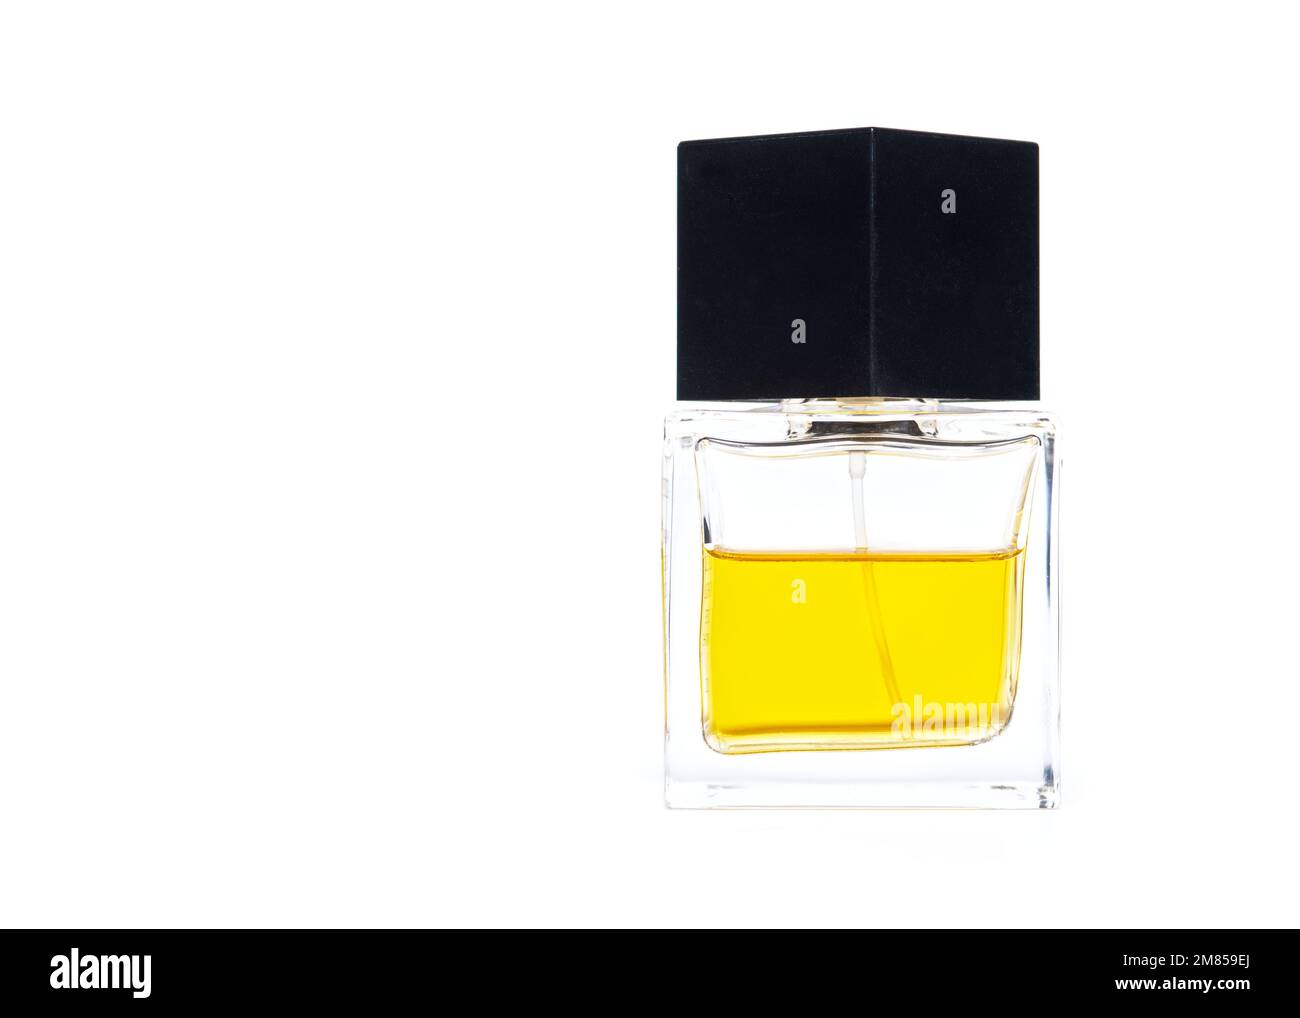 aftershave / perfume bottle on white background Stock Photo